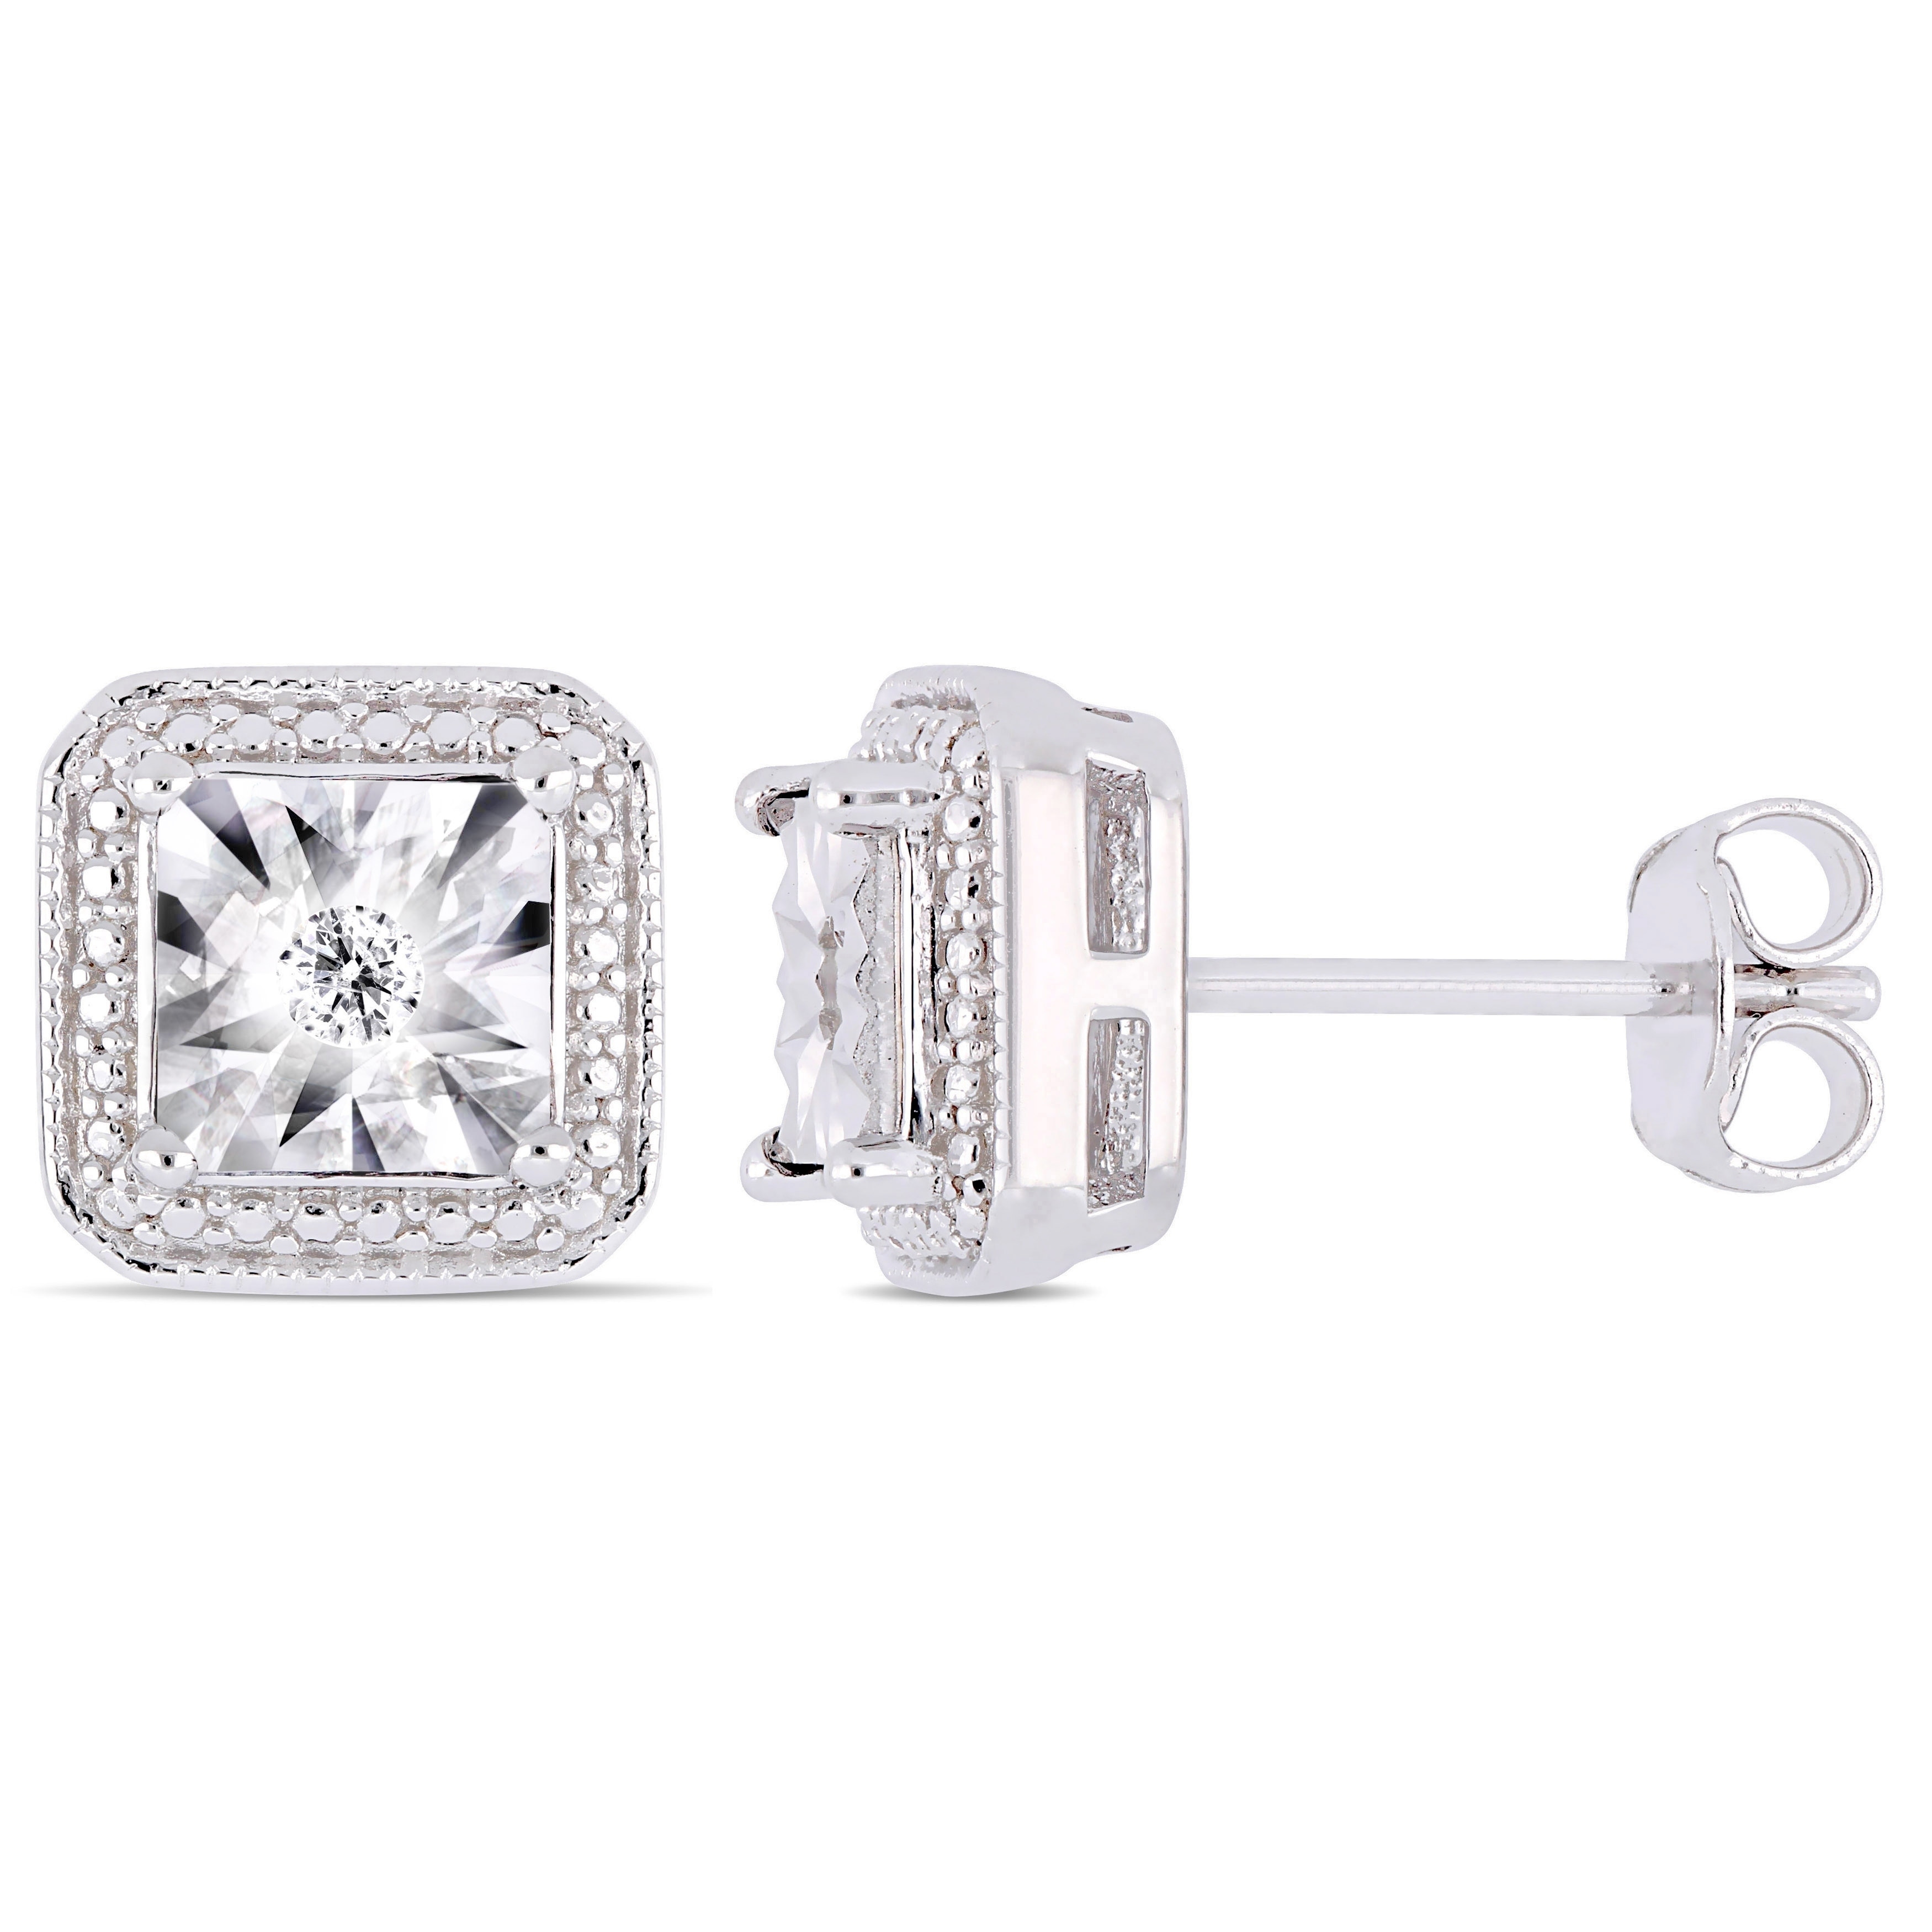 silver and diamond earrings